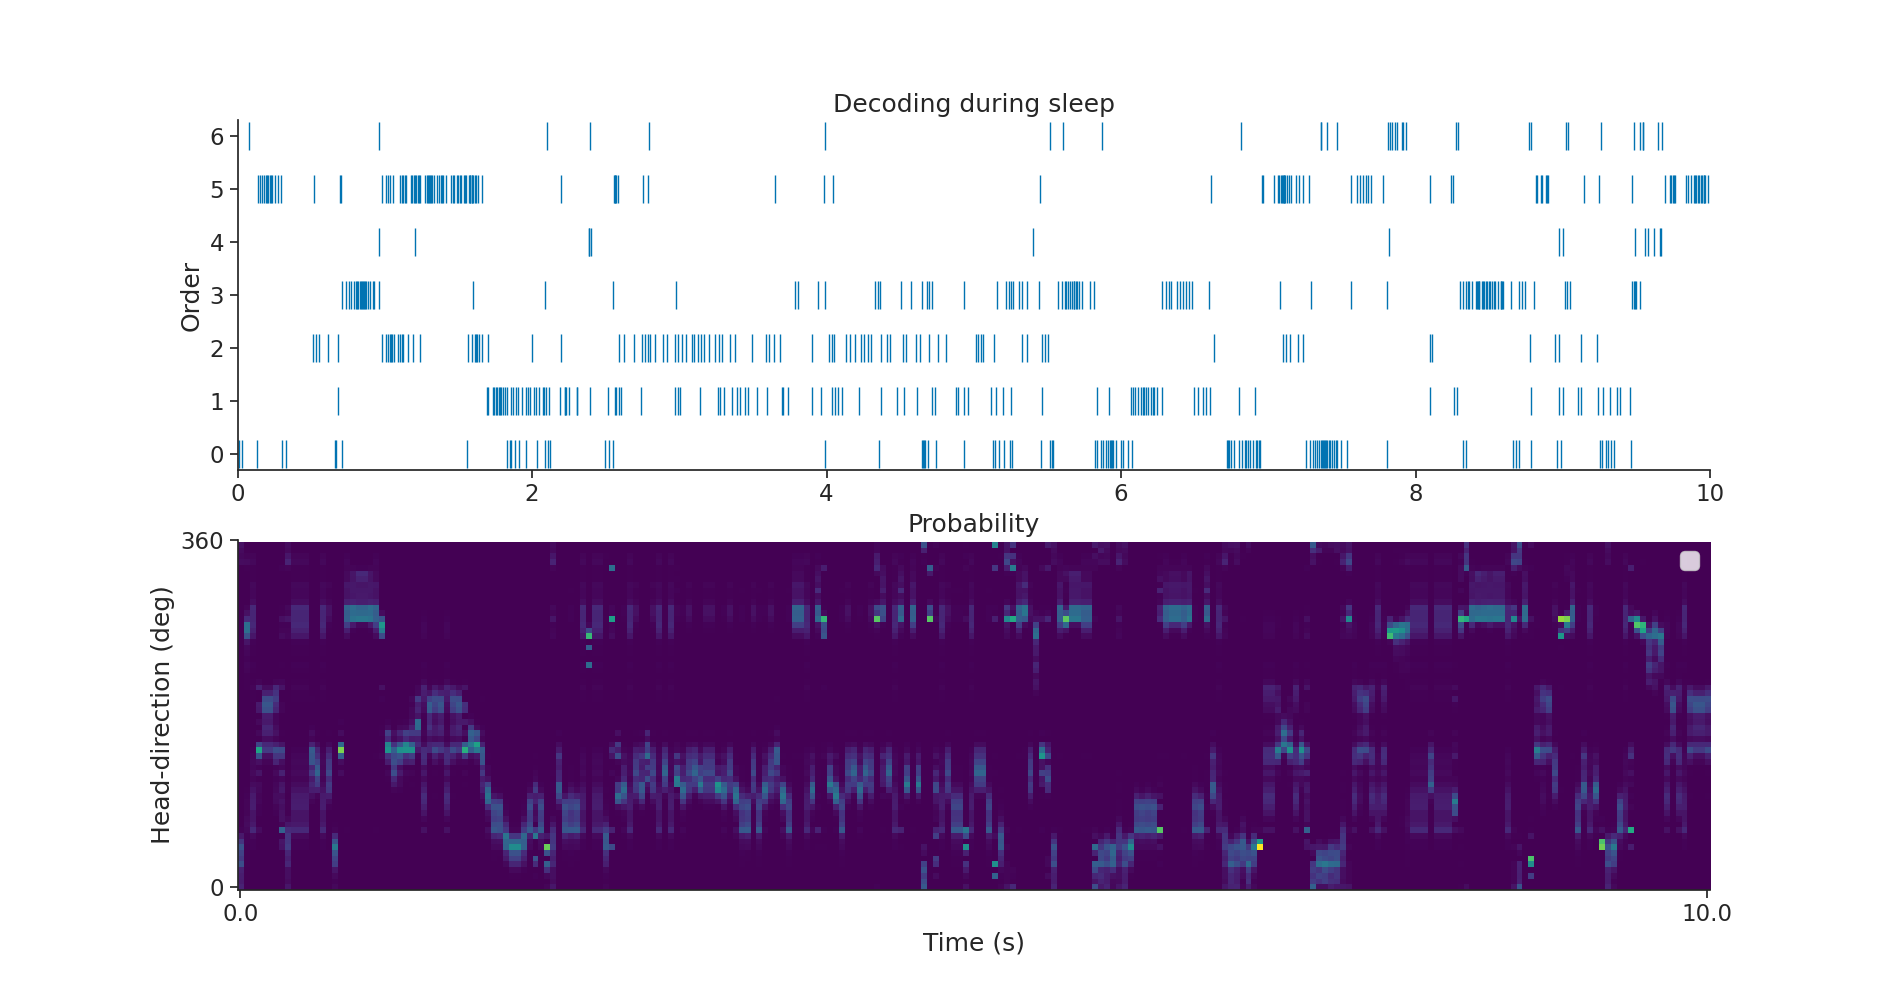 Decoding during sleep, Probability